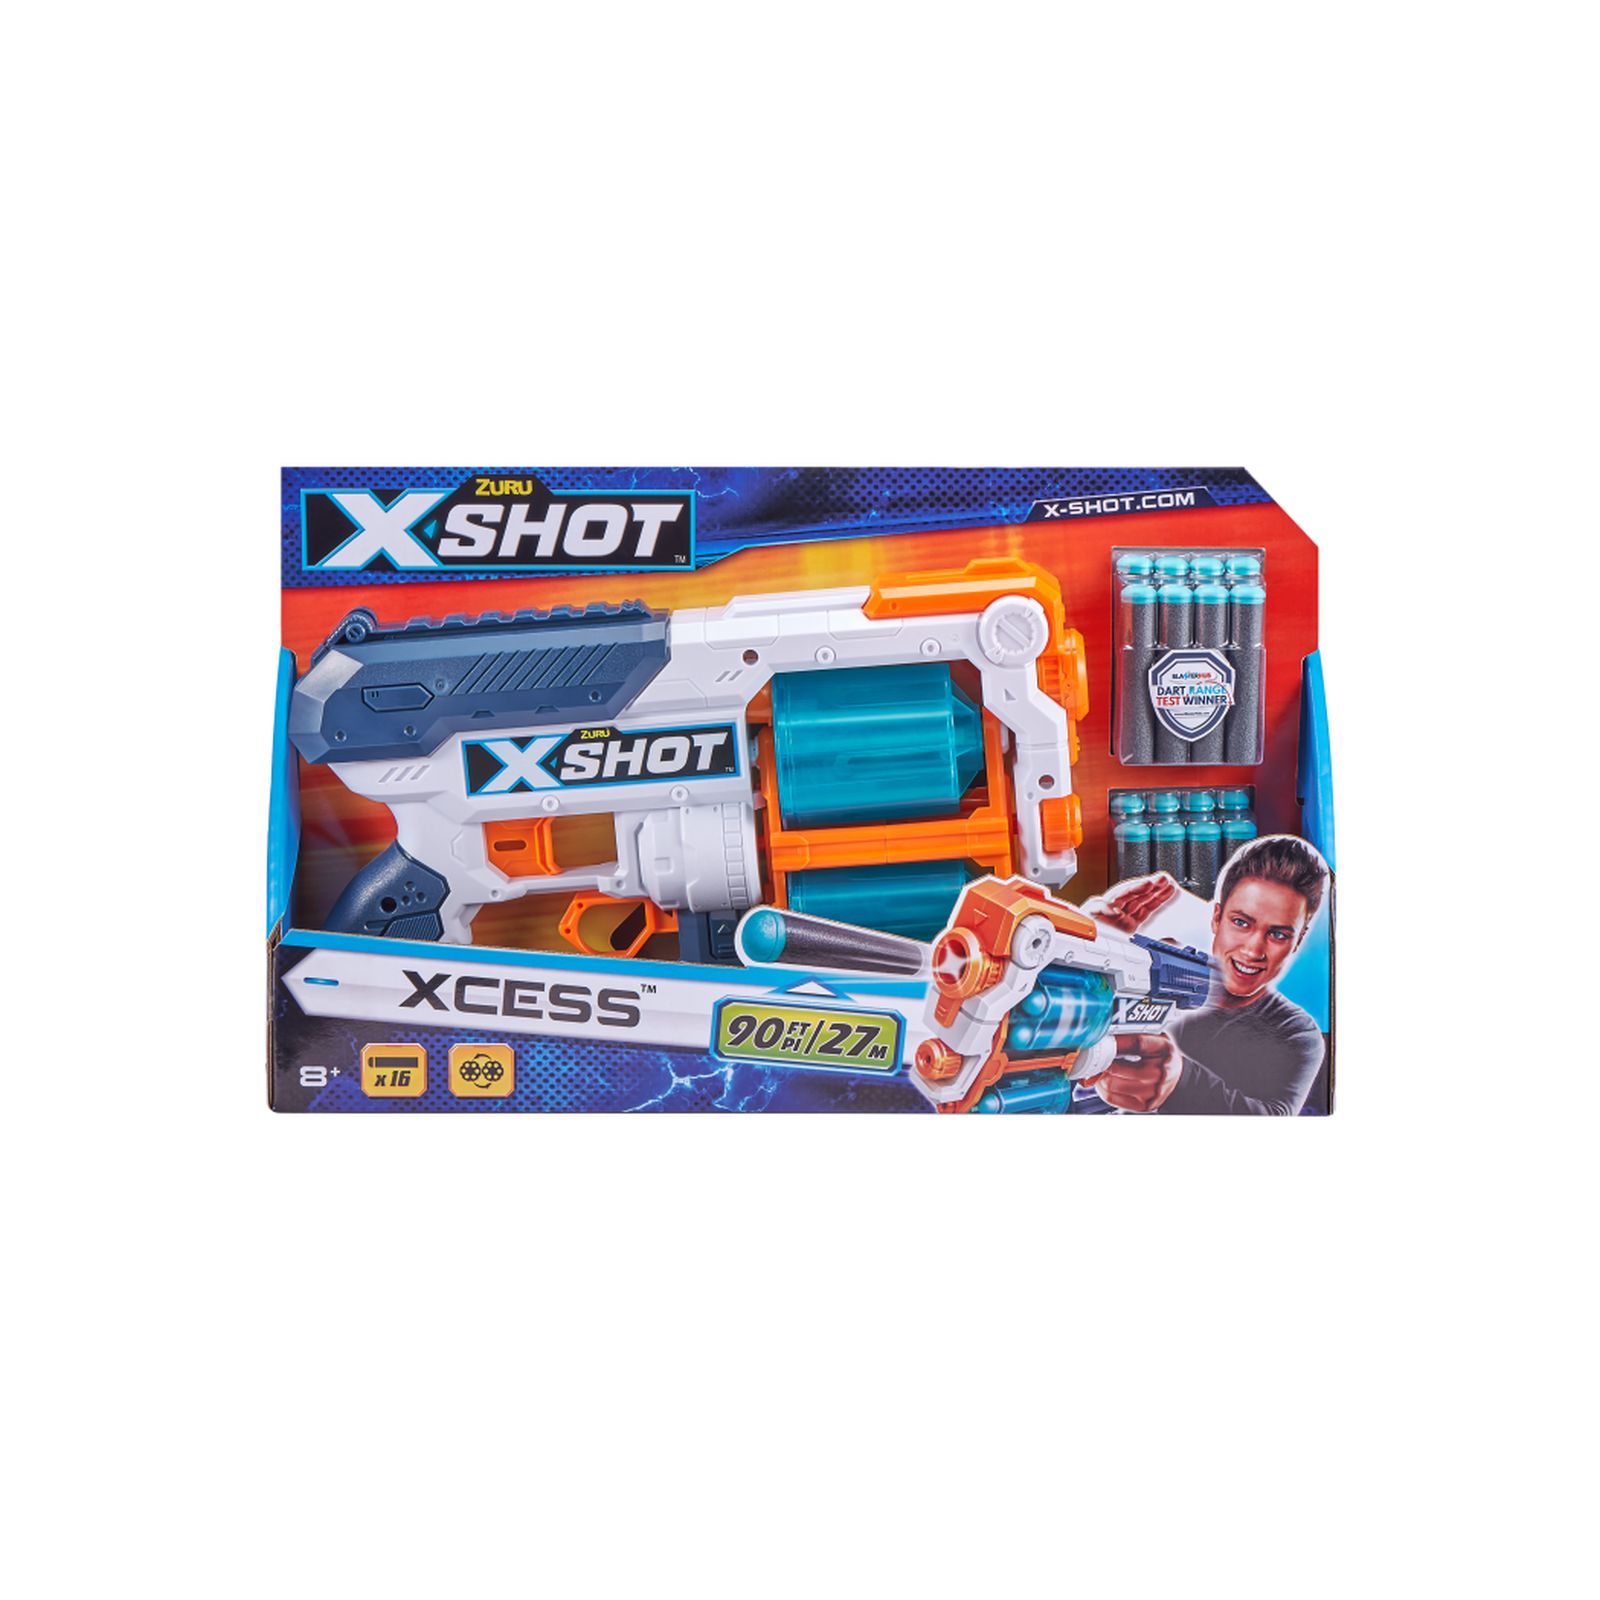 Fucile x-shot xcess - SUN&SPORT, X-SHOT